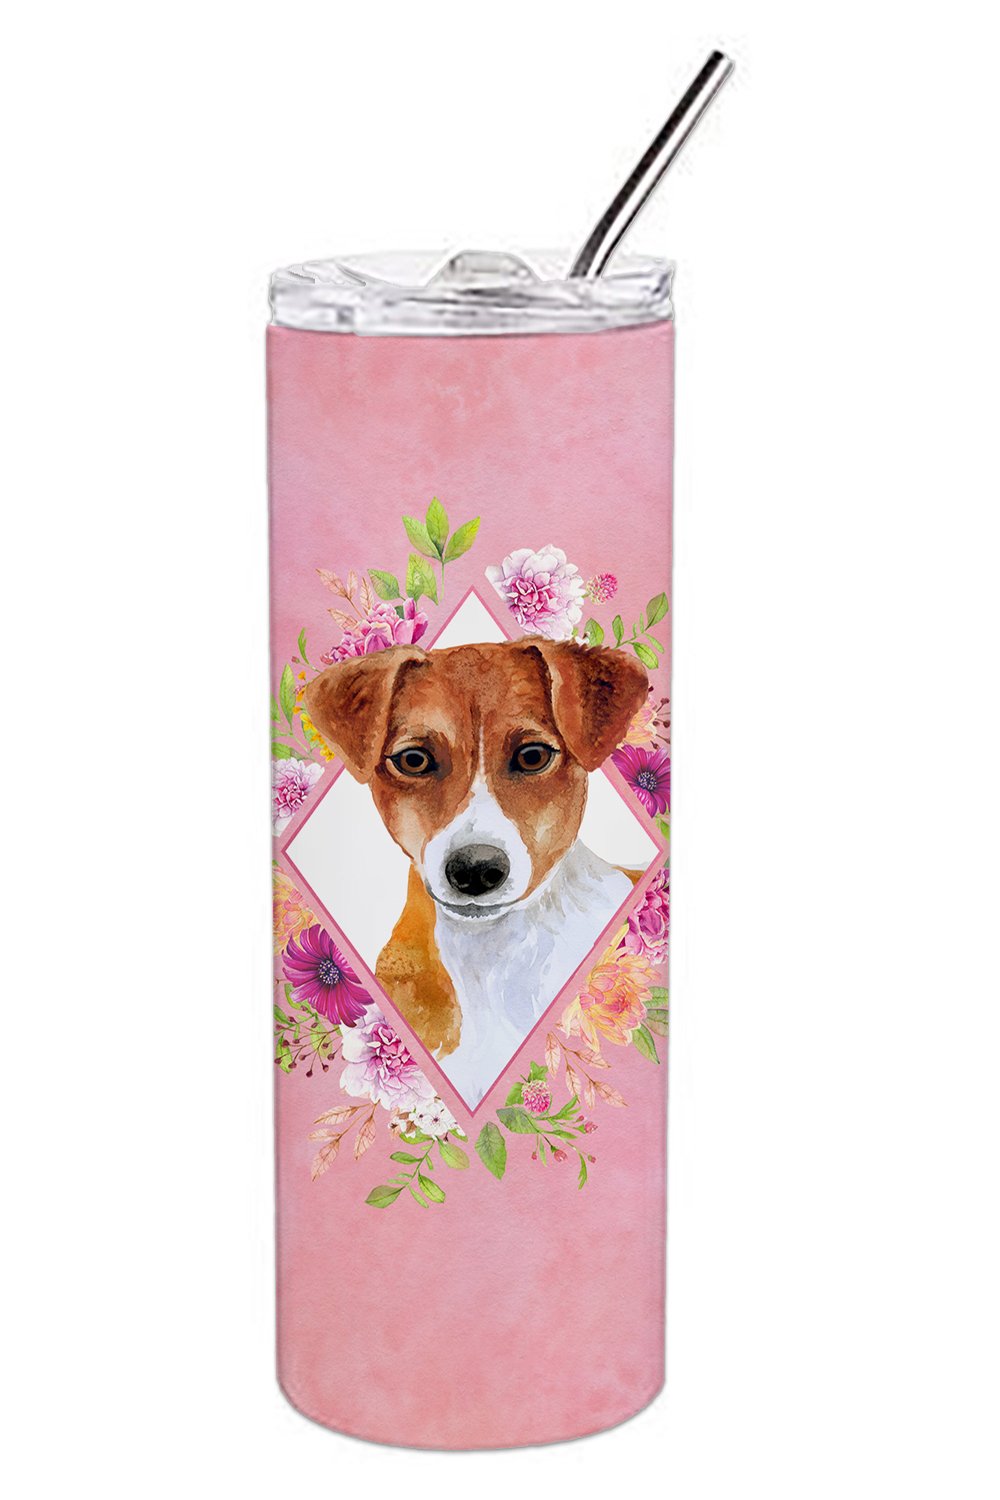 Jack Russell Terrier #2 Pink Flowers Double Walled Stainless Steel 20 oz Skinny Tumbler CK4156TBL20 by Caroline's Treasures